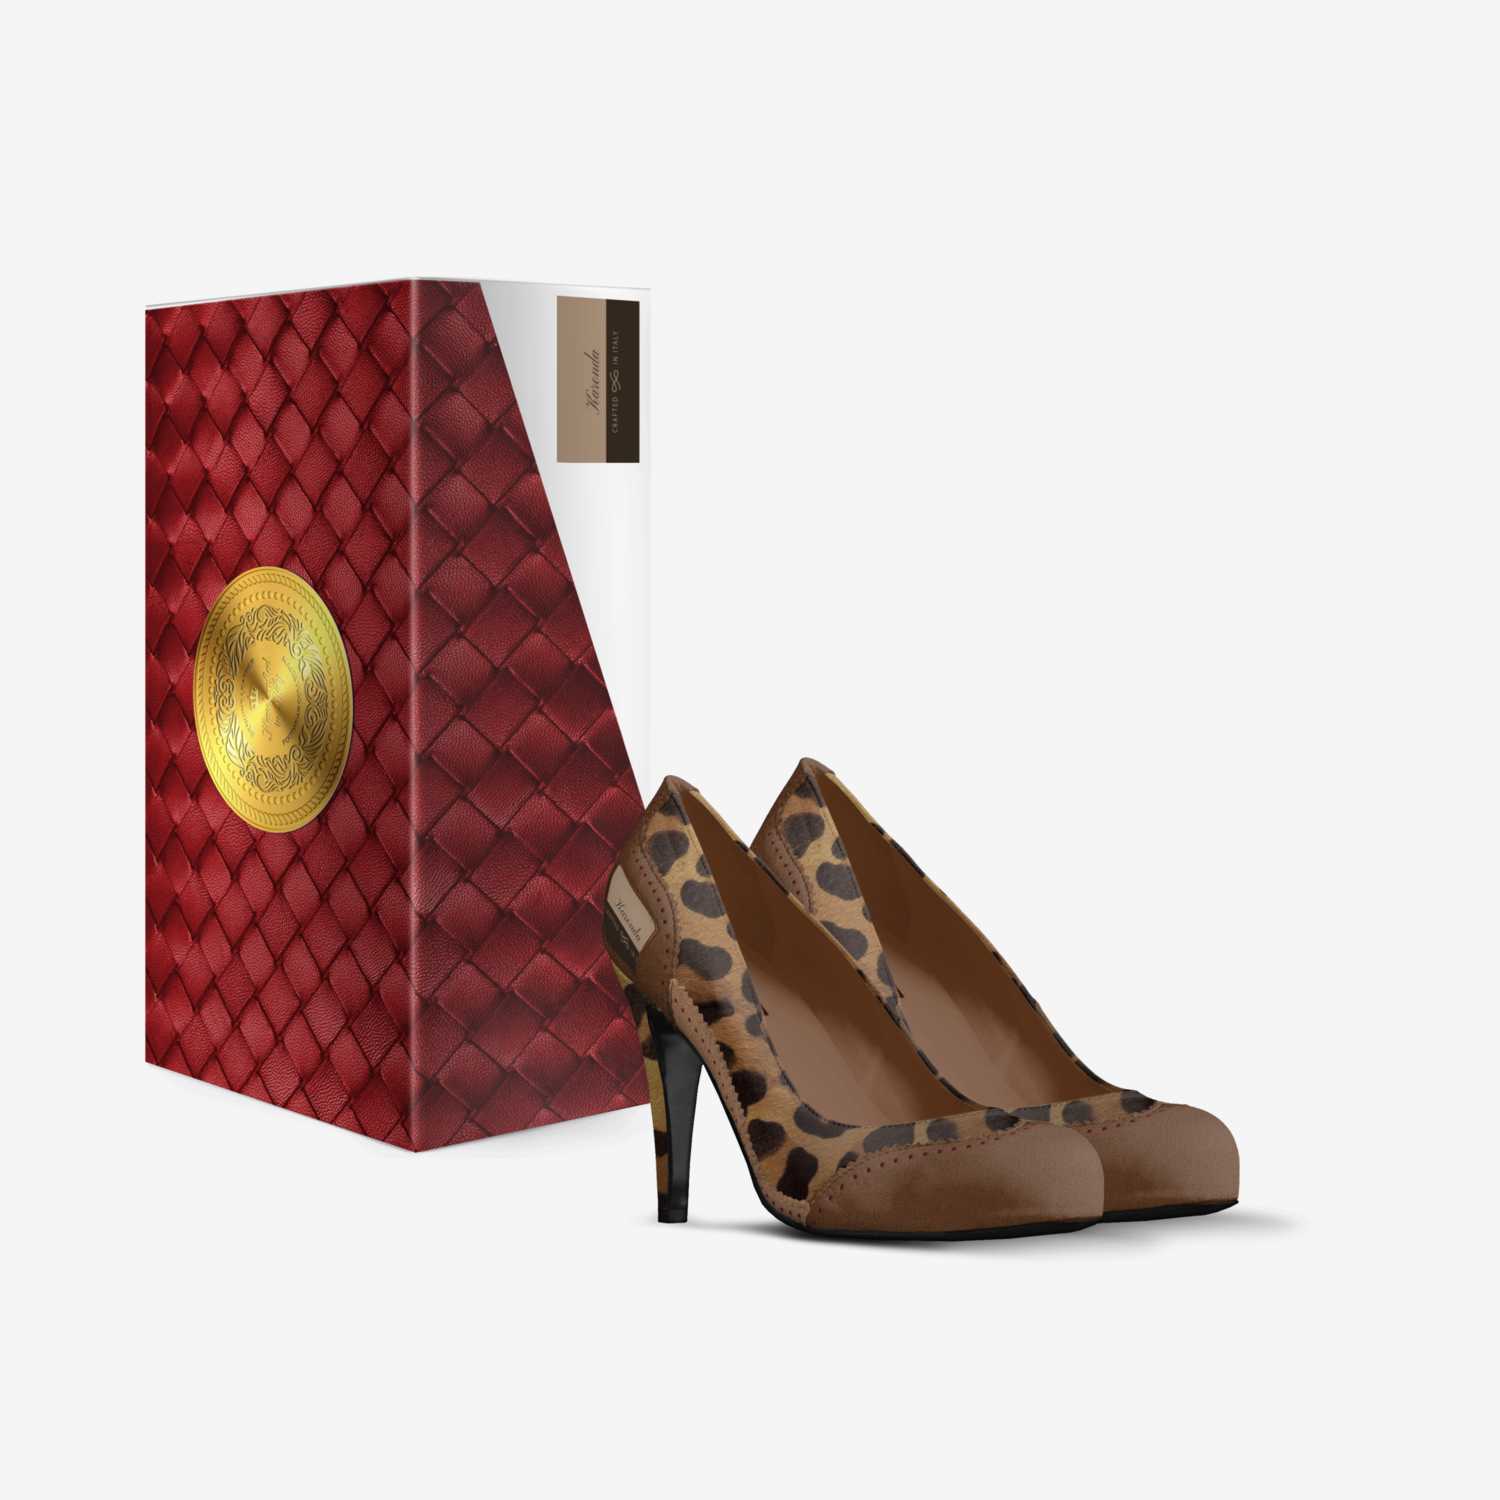 Karonda custom made in Italy shoes by Karonda Edwards | Box view